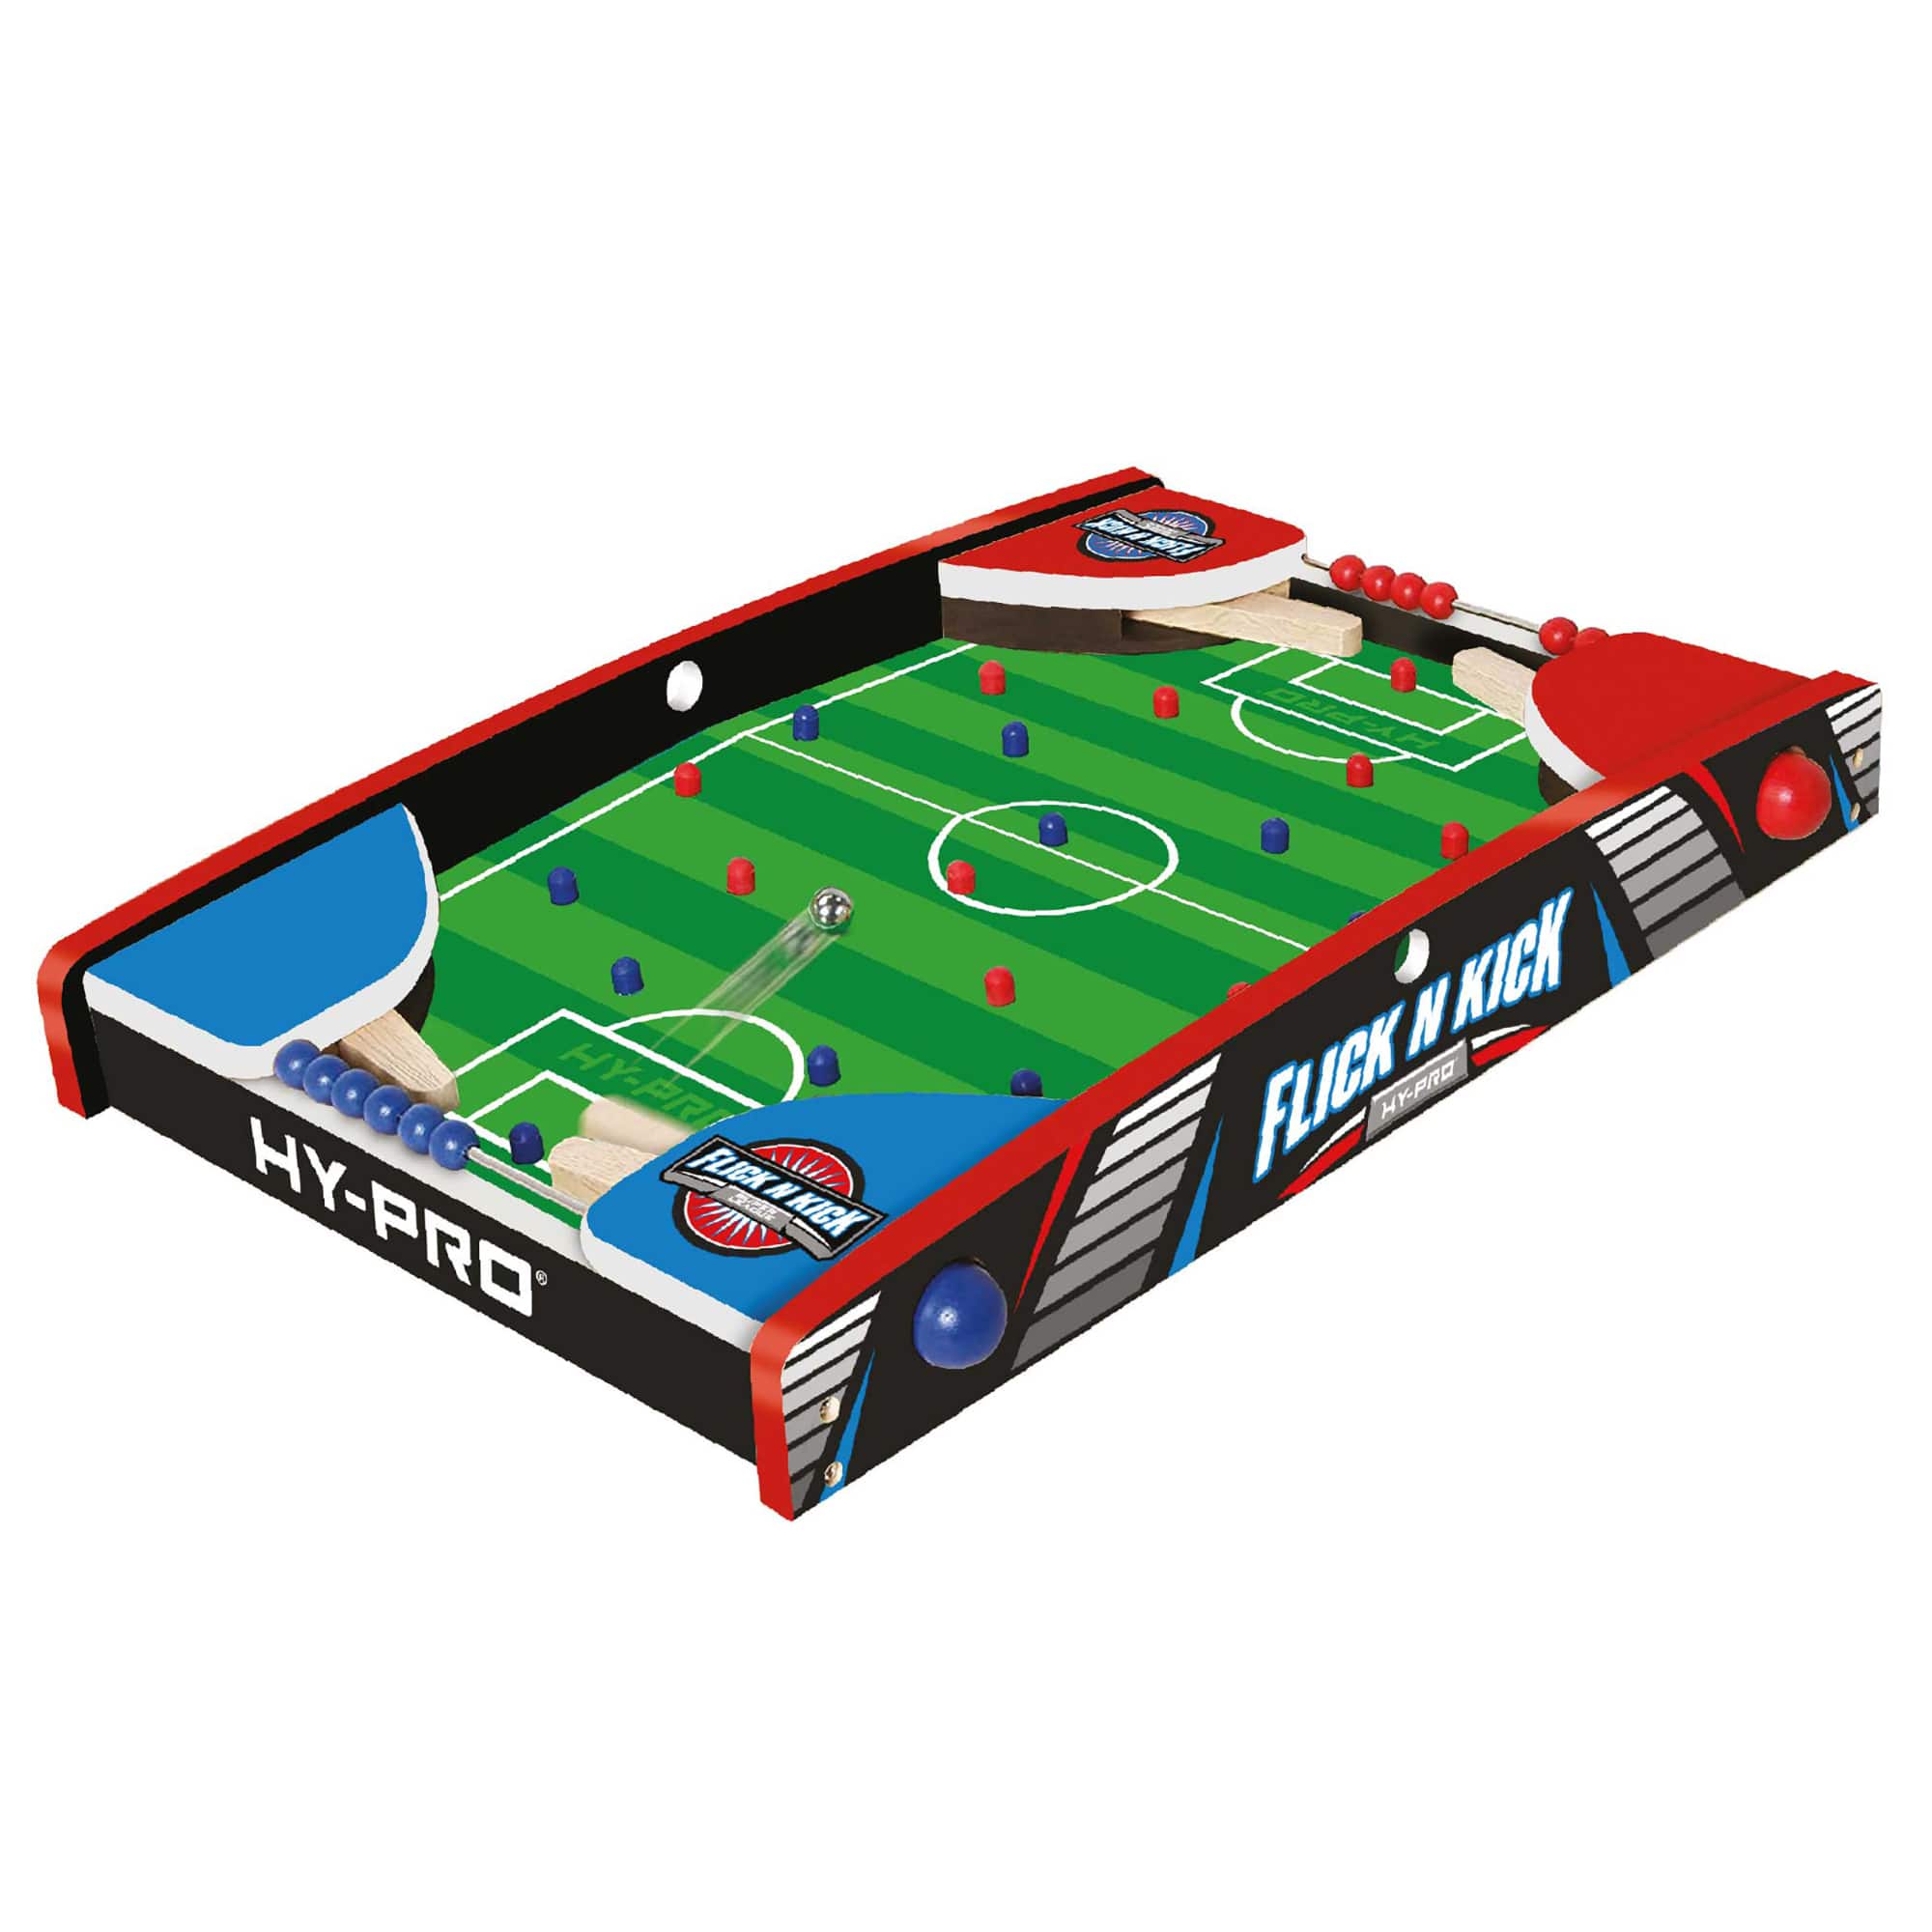 Hy-Pro Flick N Kick Table Pinball Game Toy